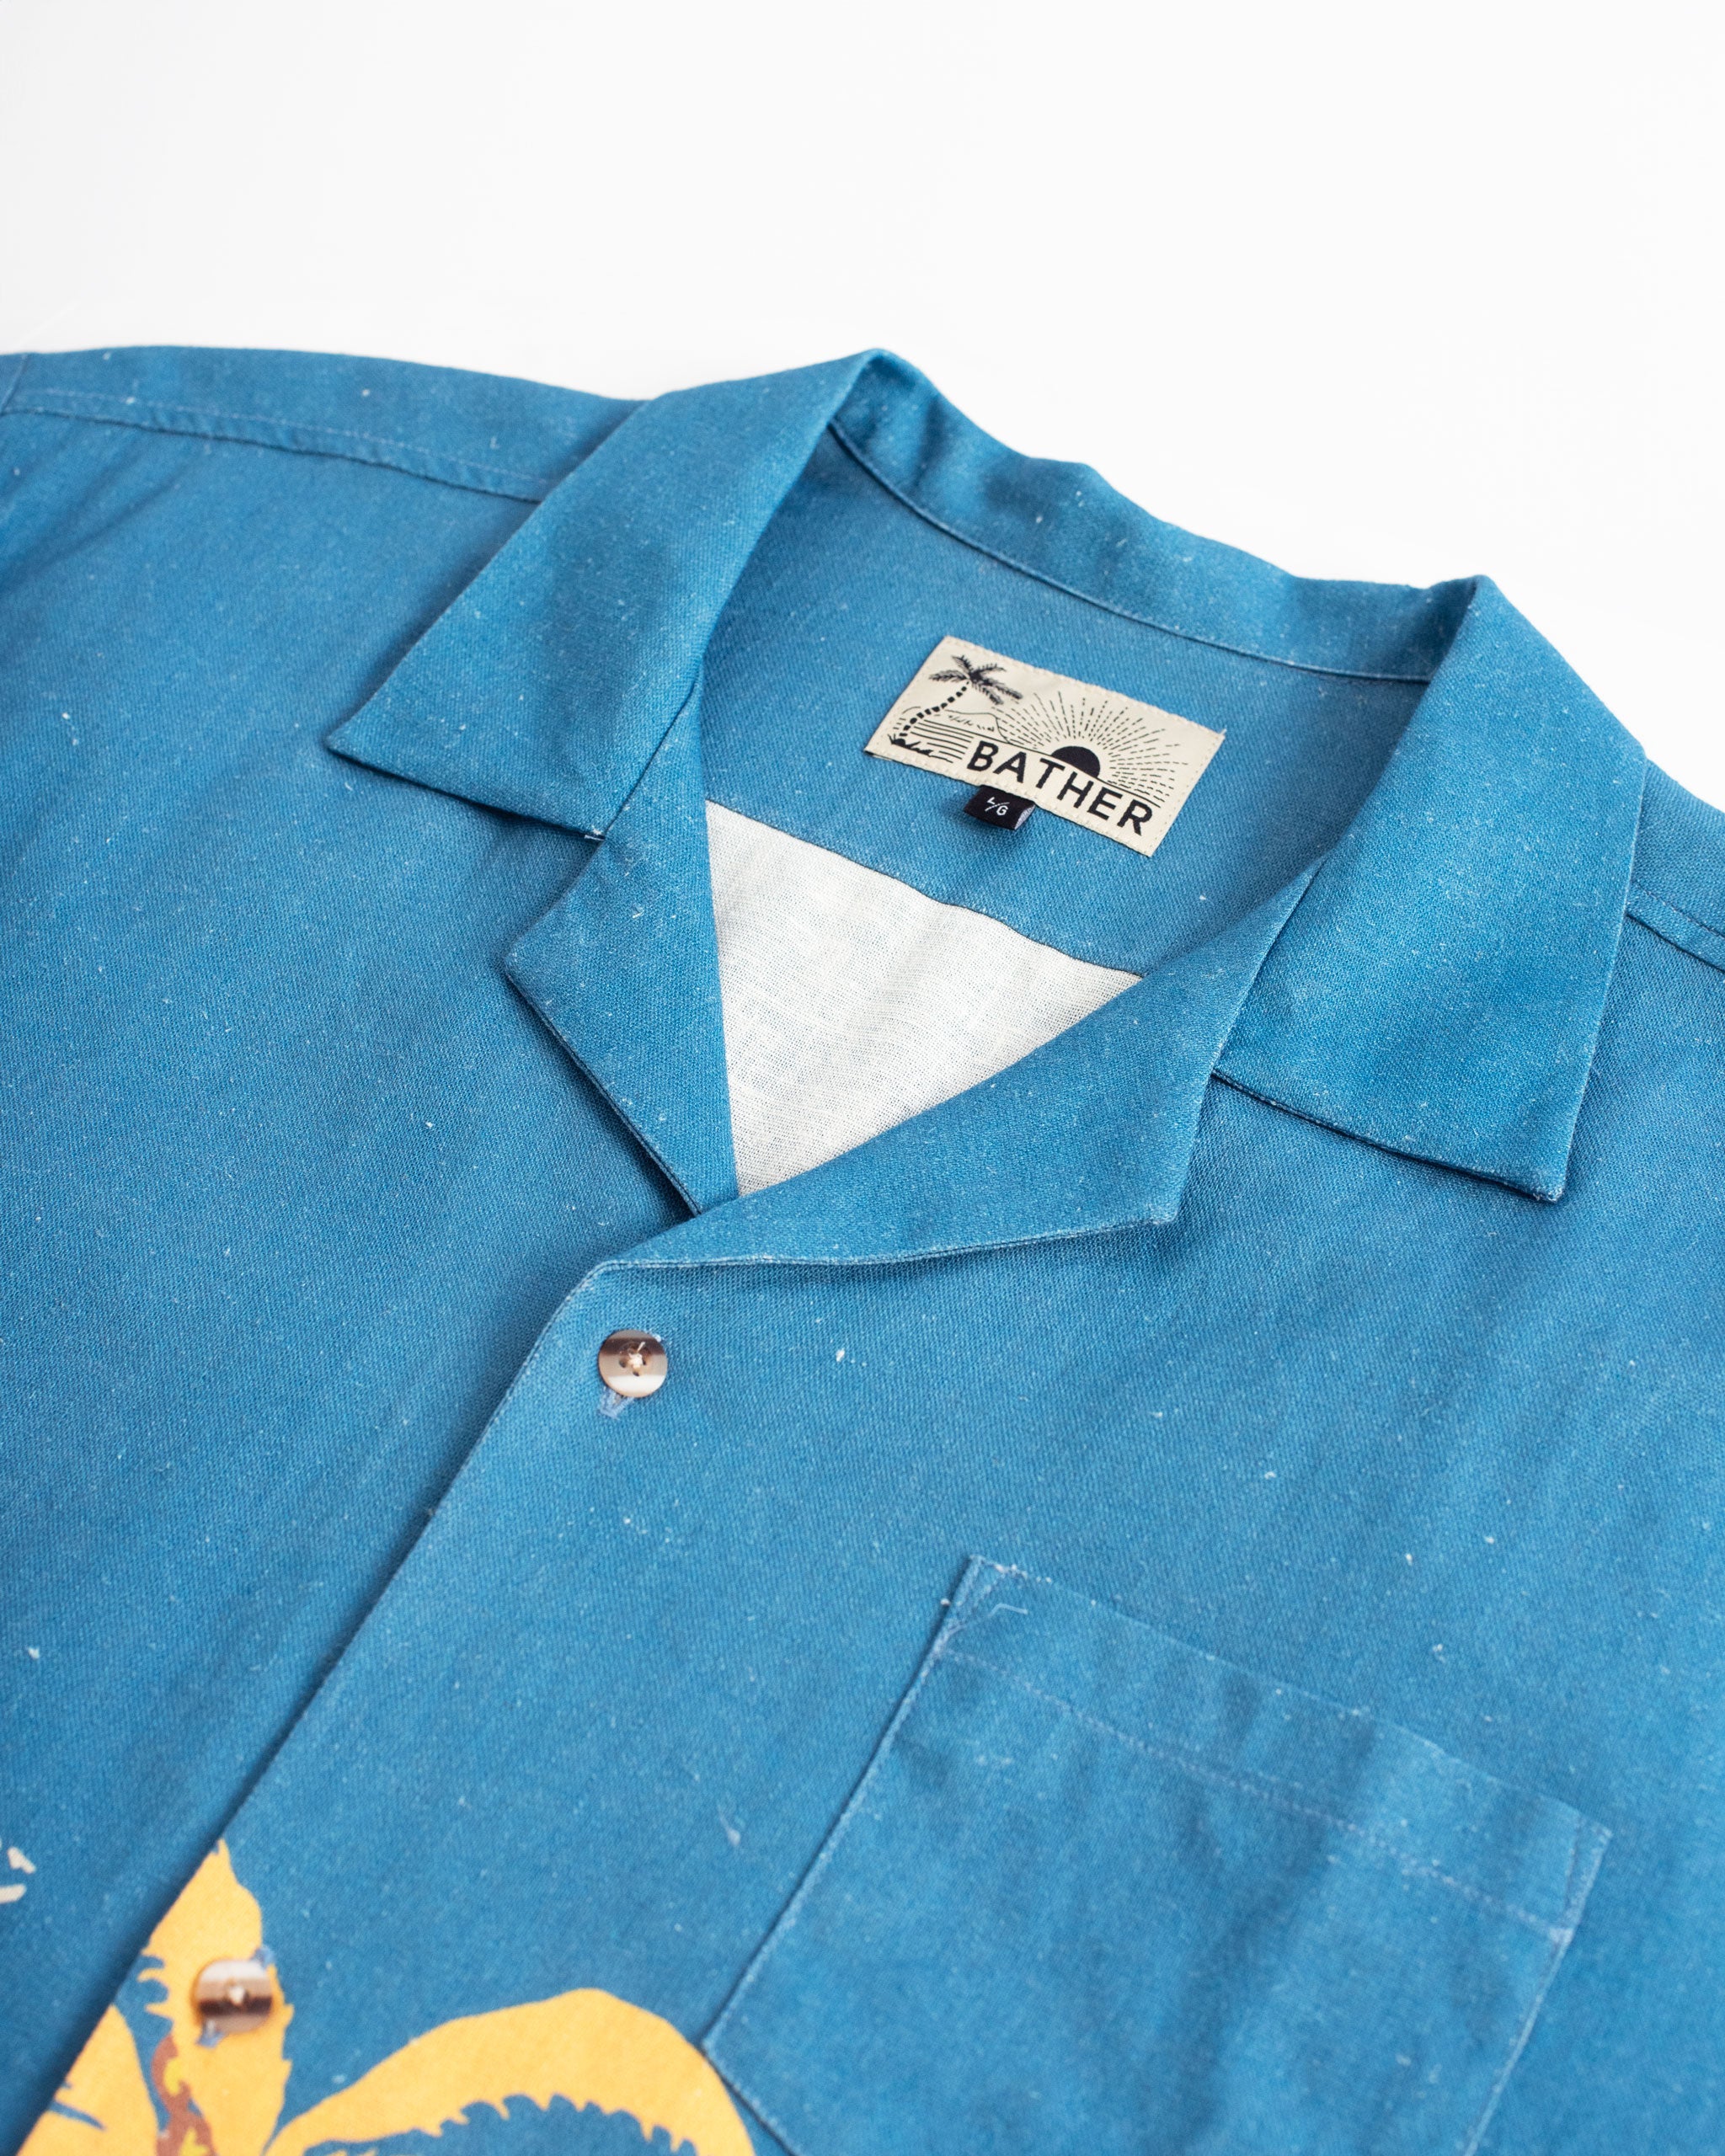 Collar Close Up of Blue linen camp shirt with Hawaiian-inspired printed beach scene